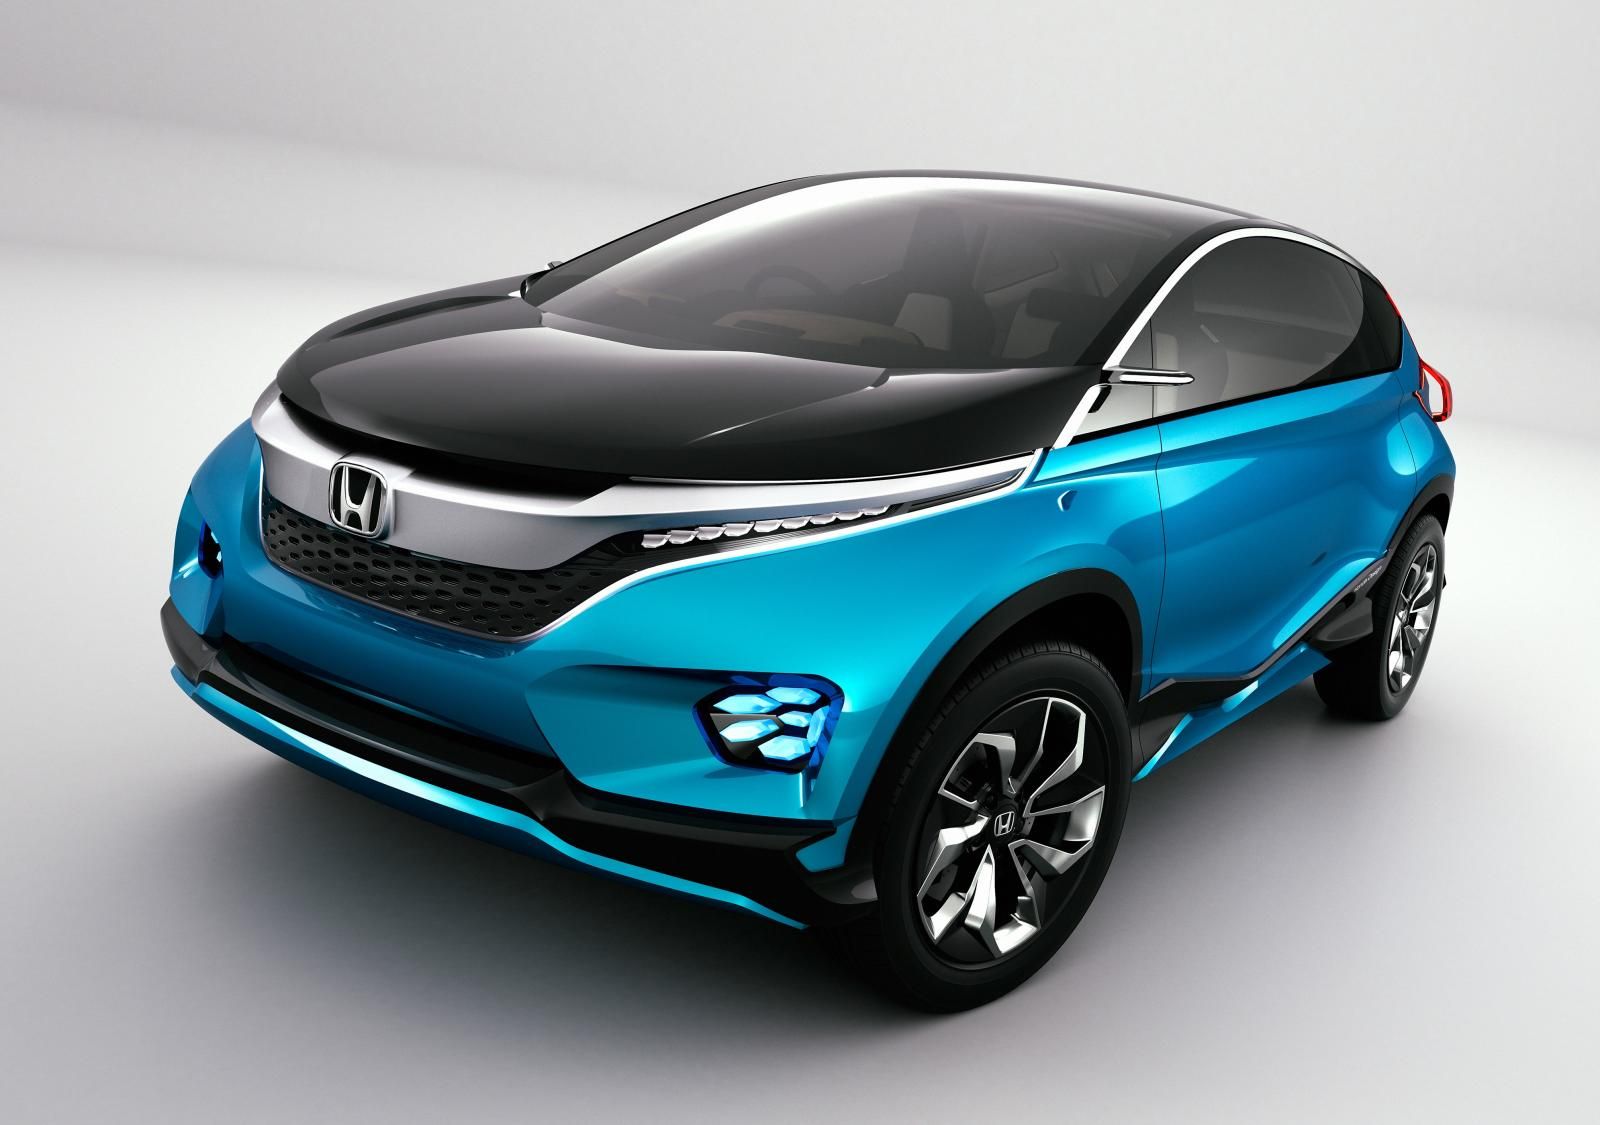 2014 Honda Vision XS-1 Concept